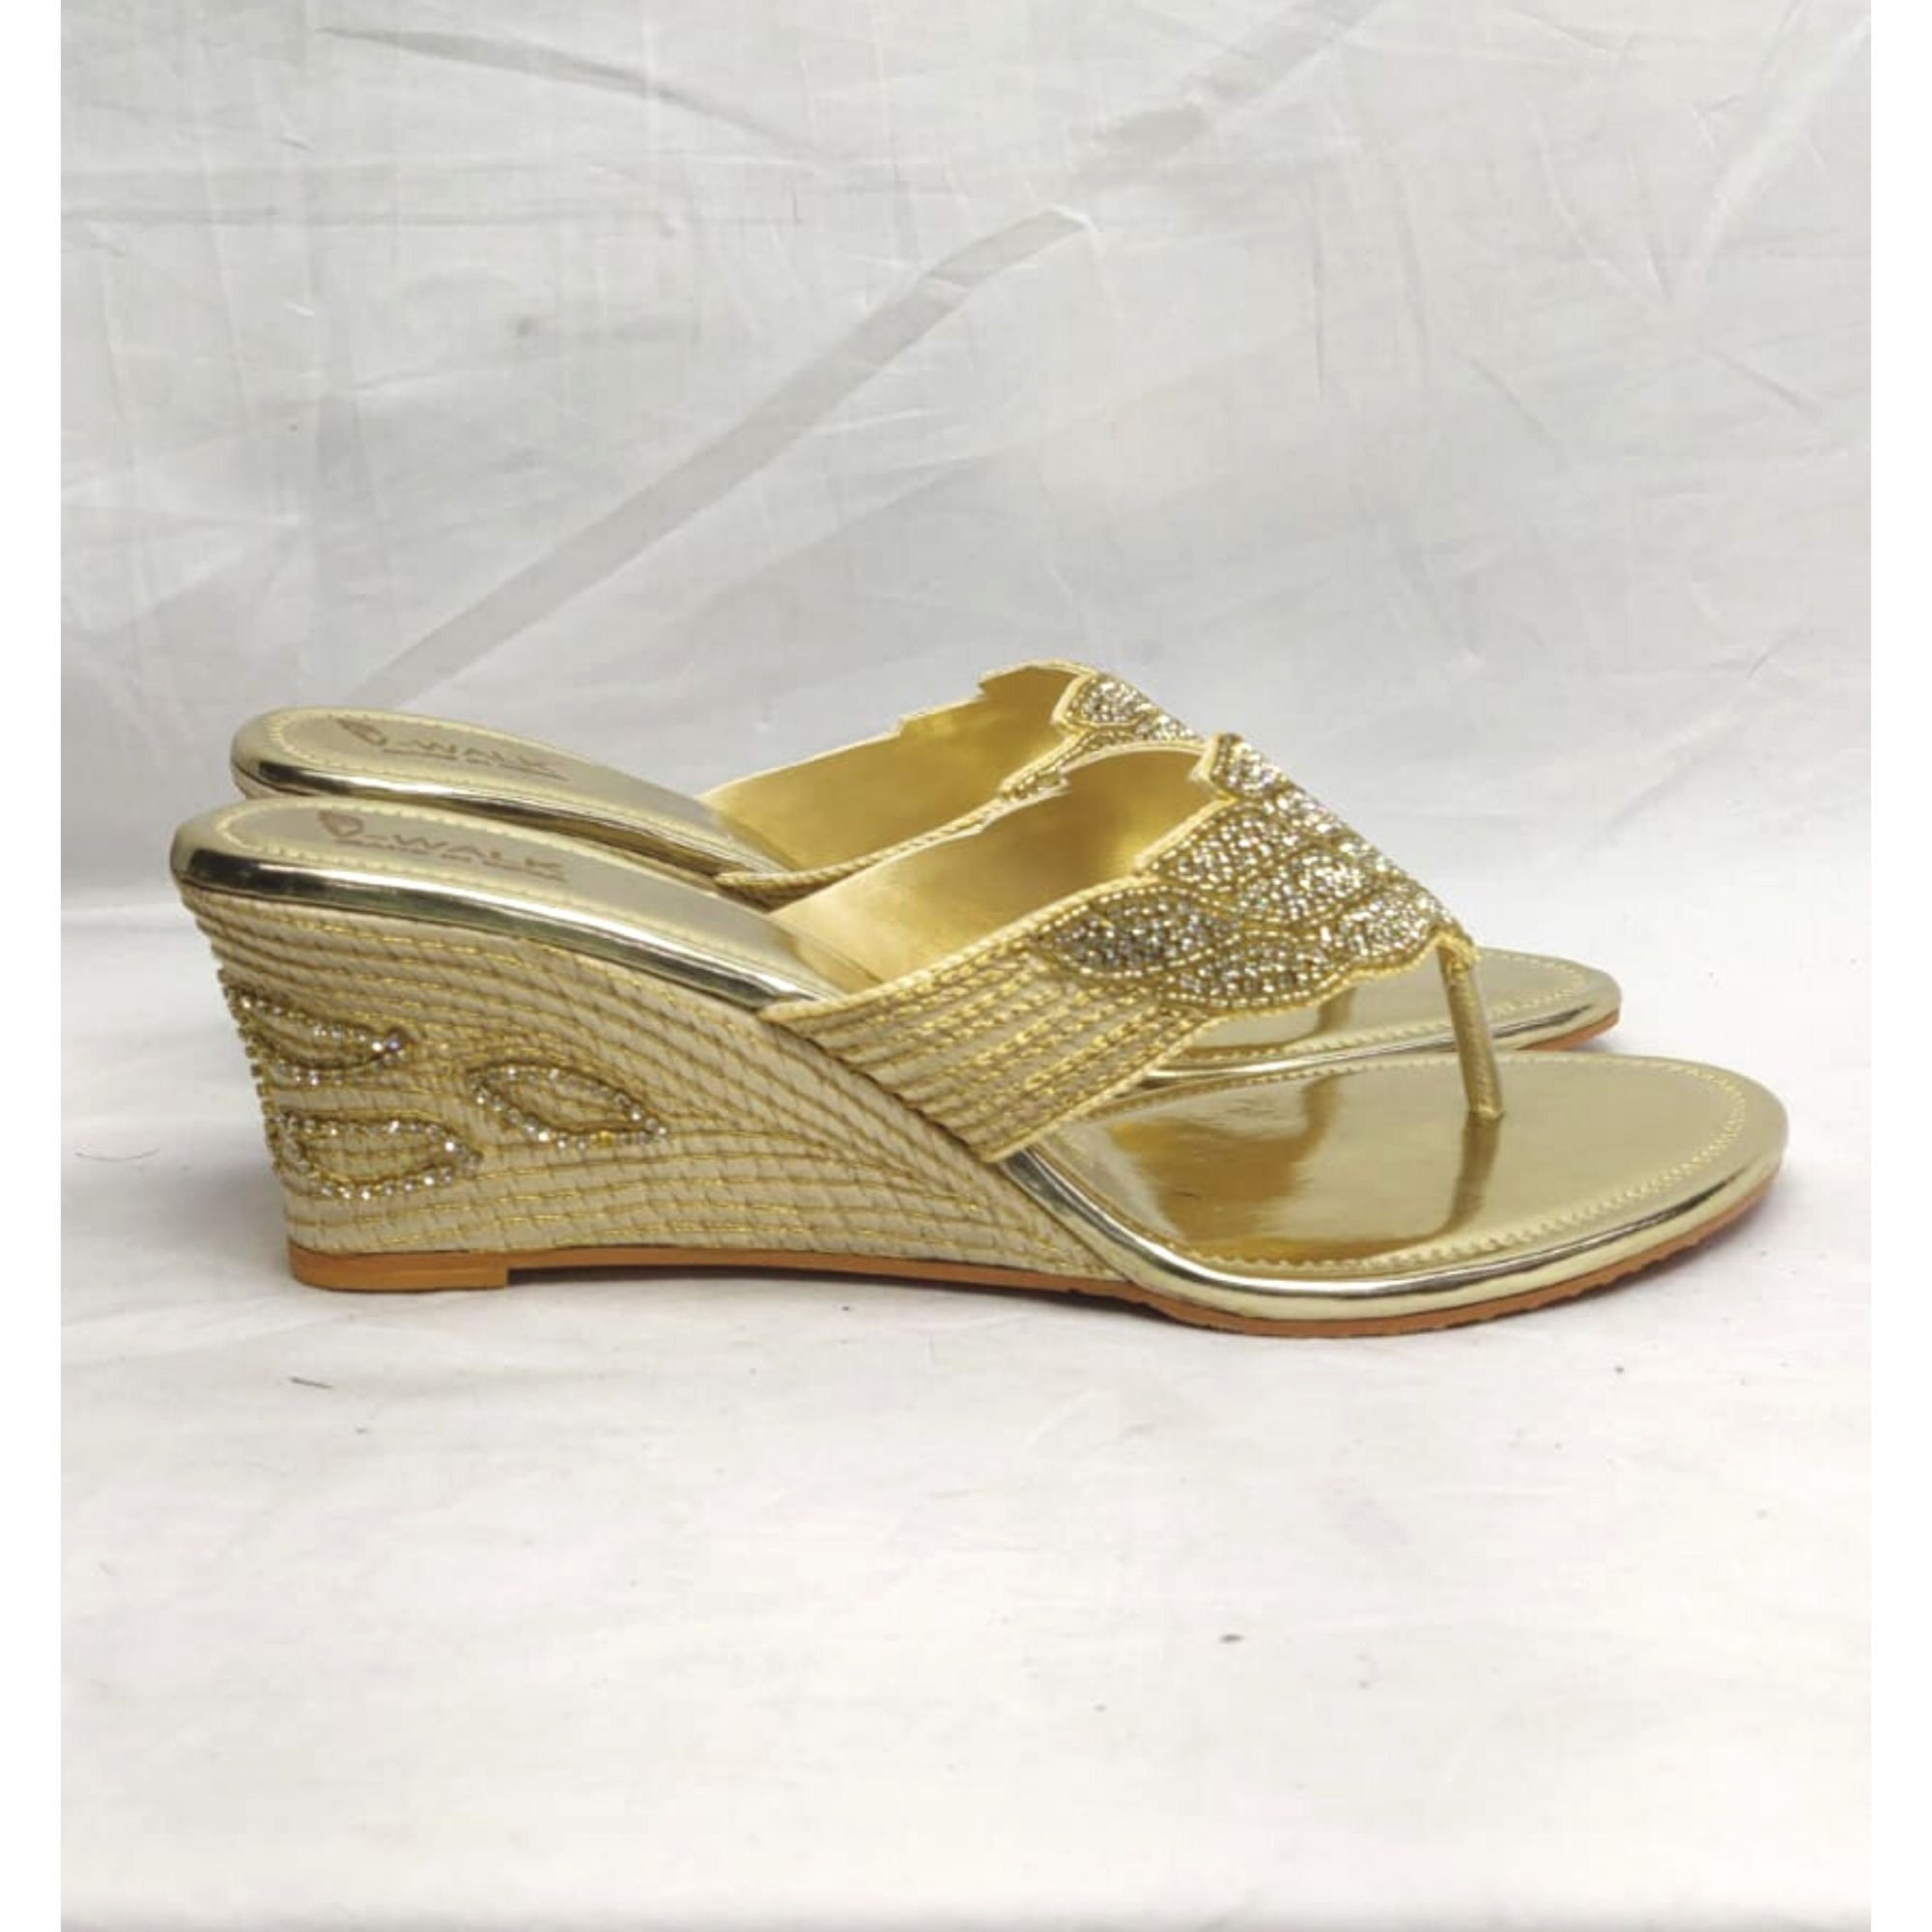 Wedding Wedges Bridal Shoes Golden Bridal Sandals in Diamond | Etsy